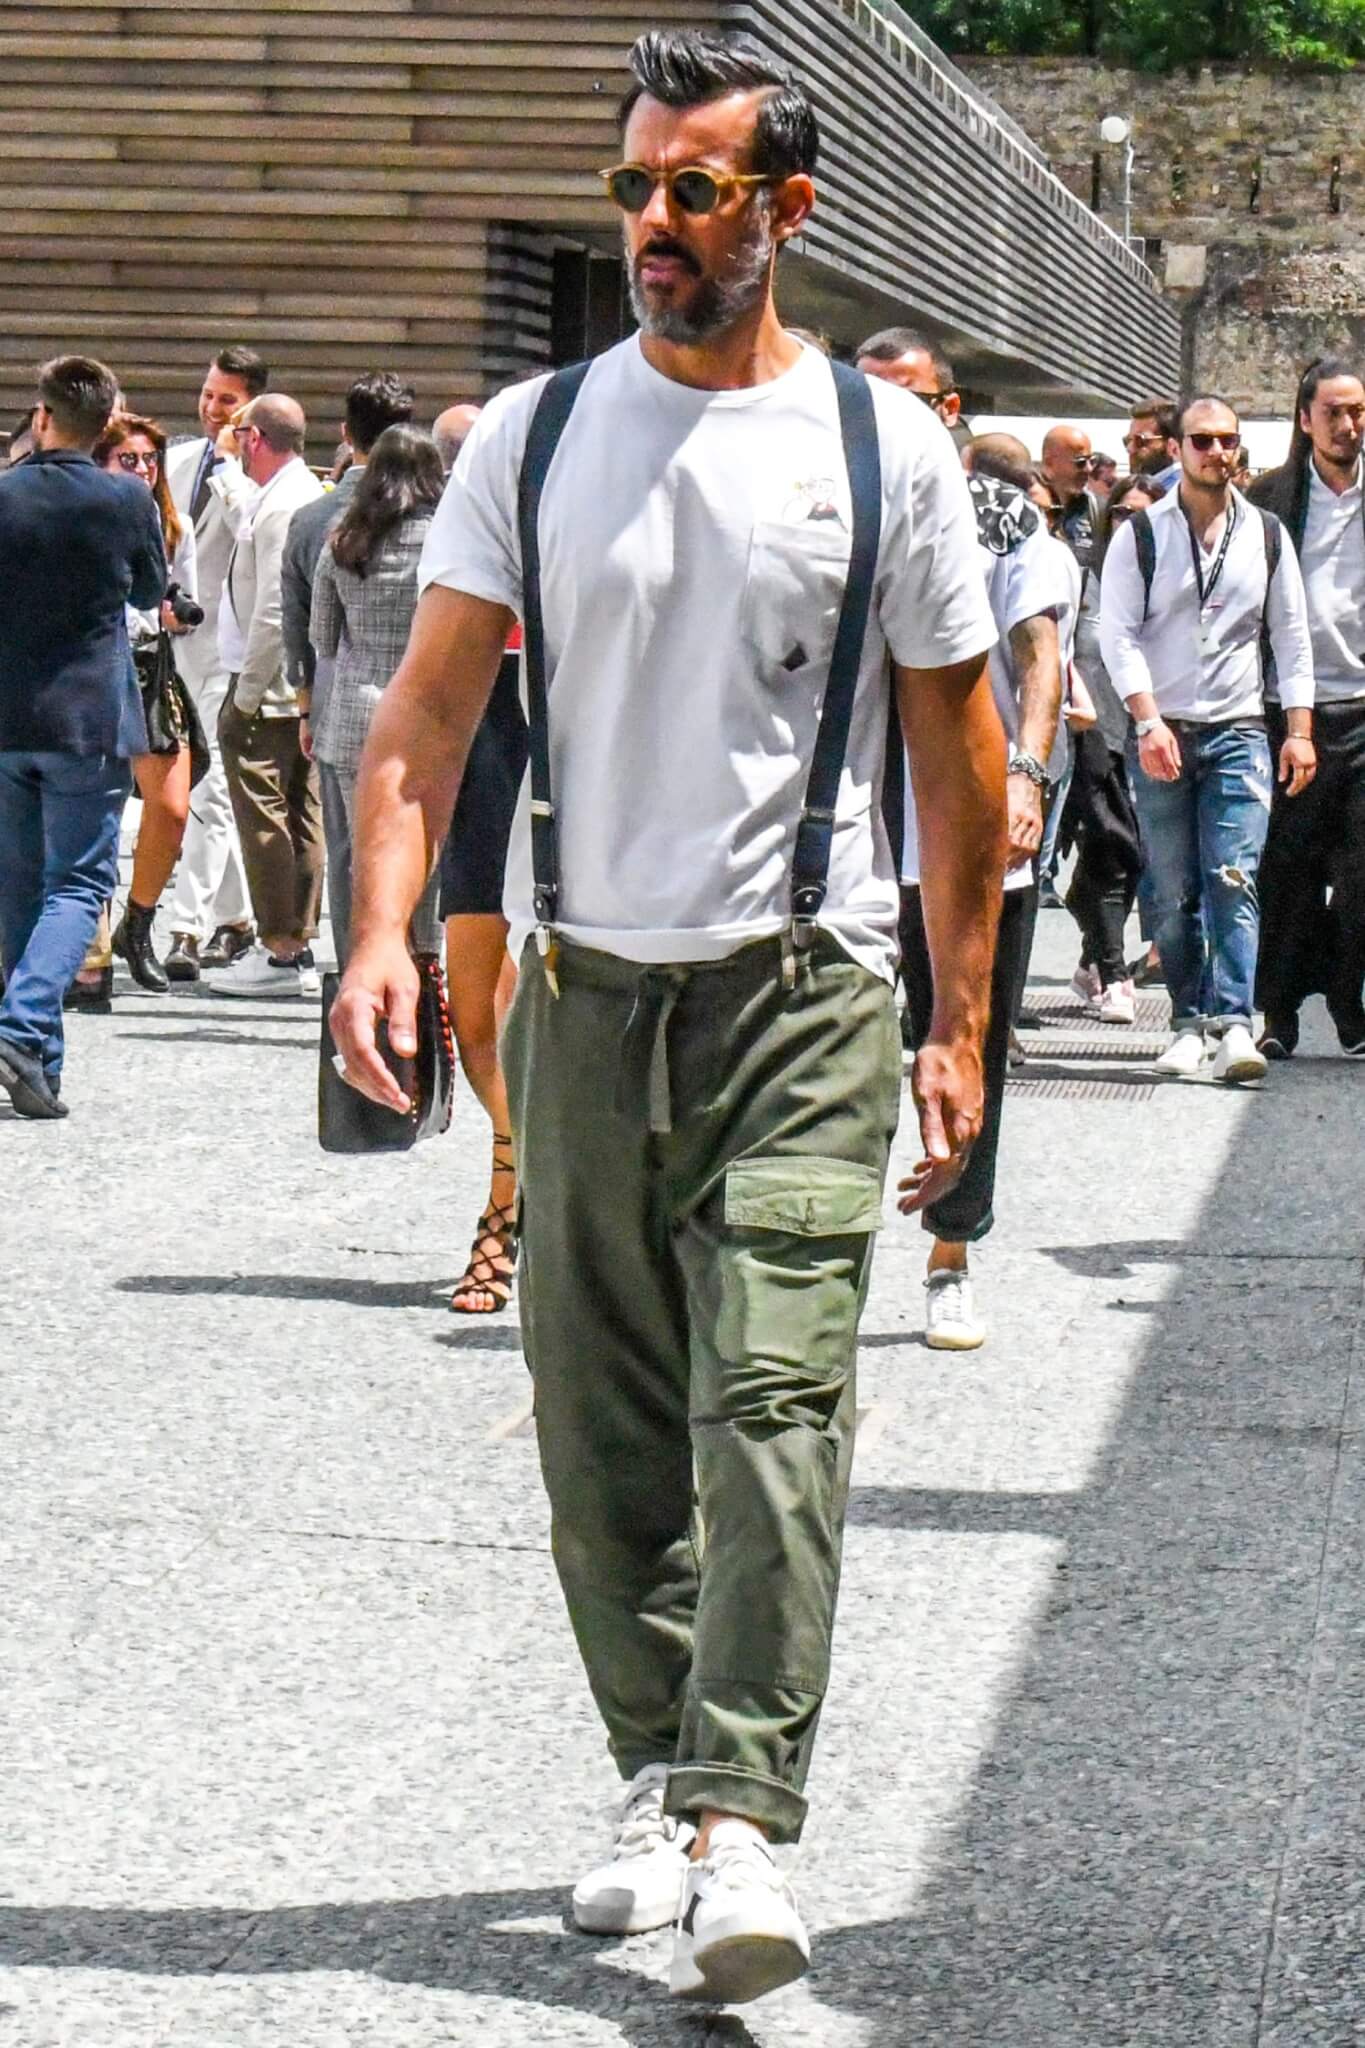 Suspenders (Braceys) give men's coordination a sophisticated look